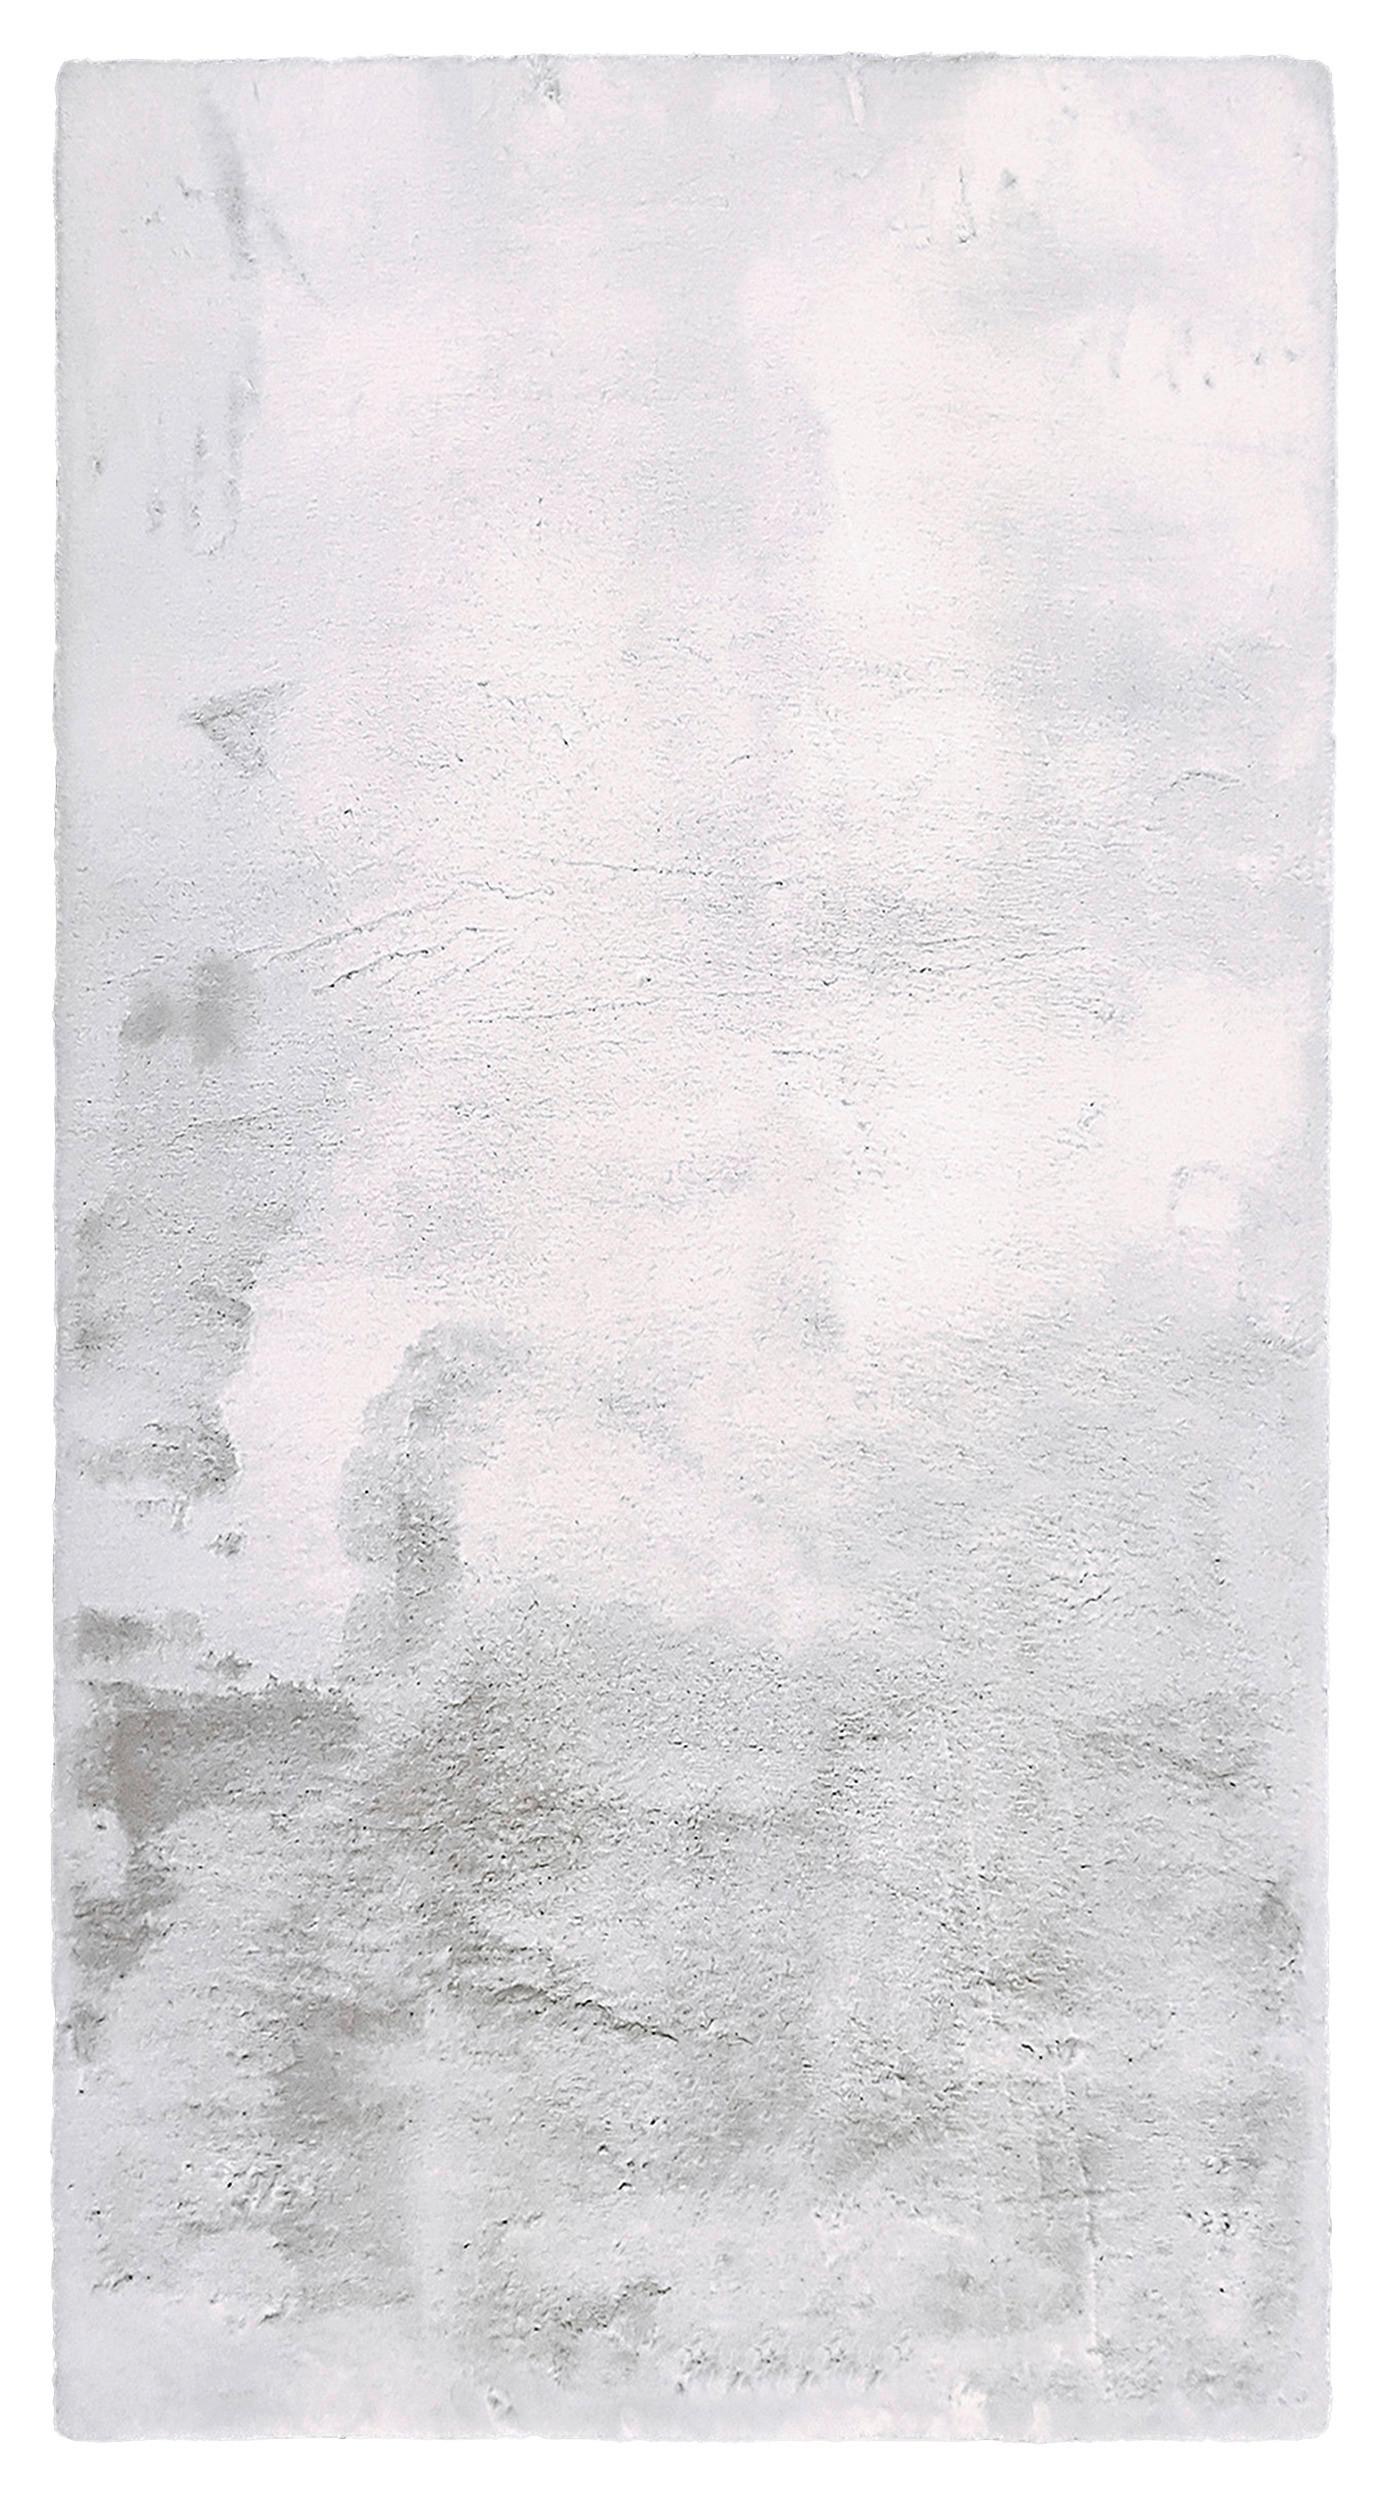 Kunstfell Denise 3 in Silber/Weiß ca. 160x220cm - Silberfarben/Weiß, ROMANTIK / LANDHAUS, Textil/Fell (160/220cm) - Modern Living